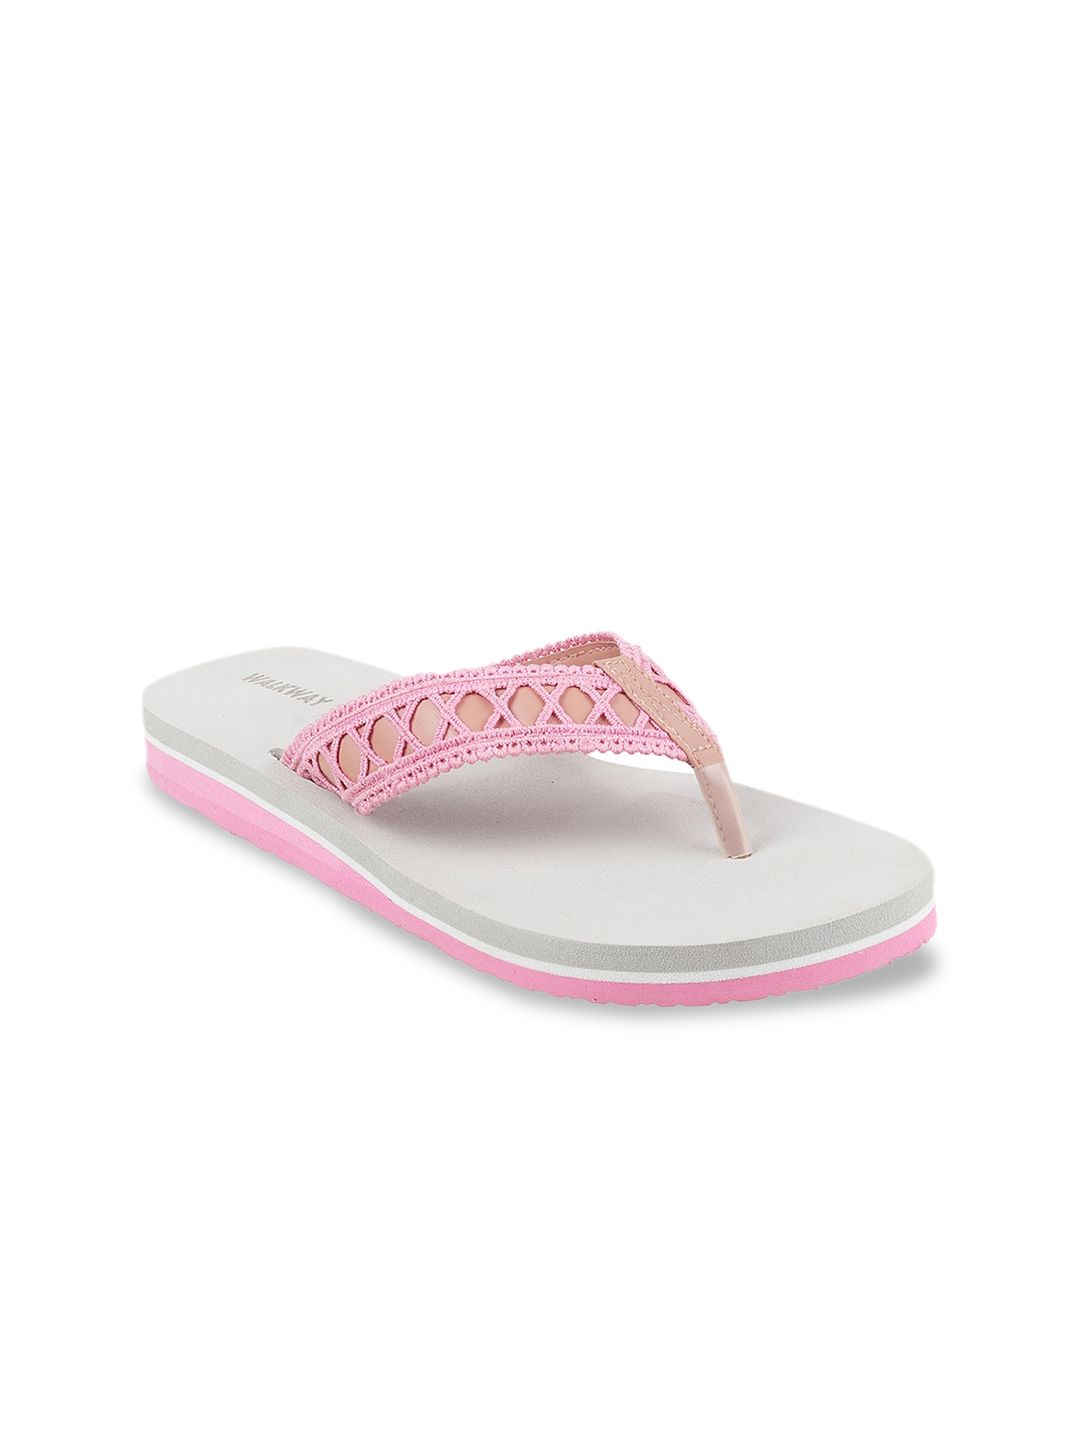 WALKWAY by Metro Women Pink Thong Flip-Flops Price in India